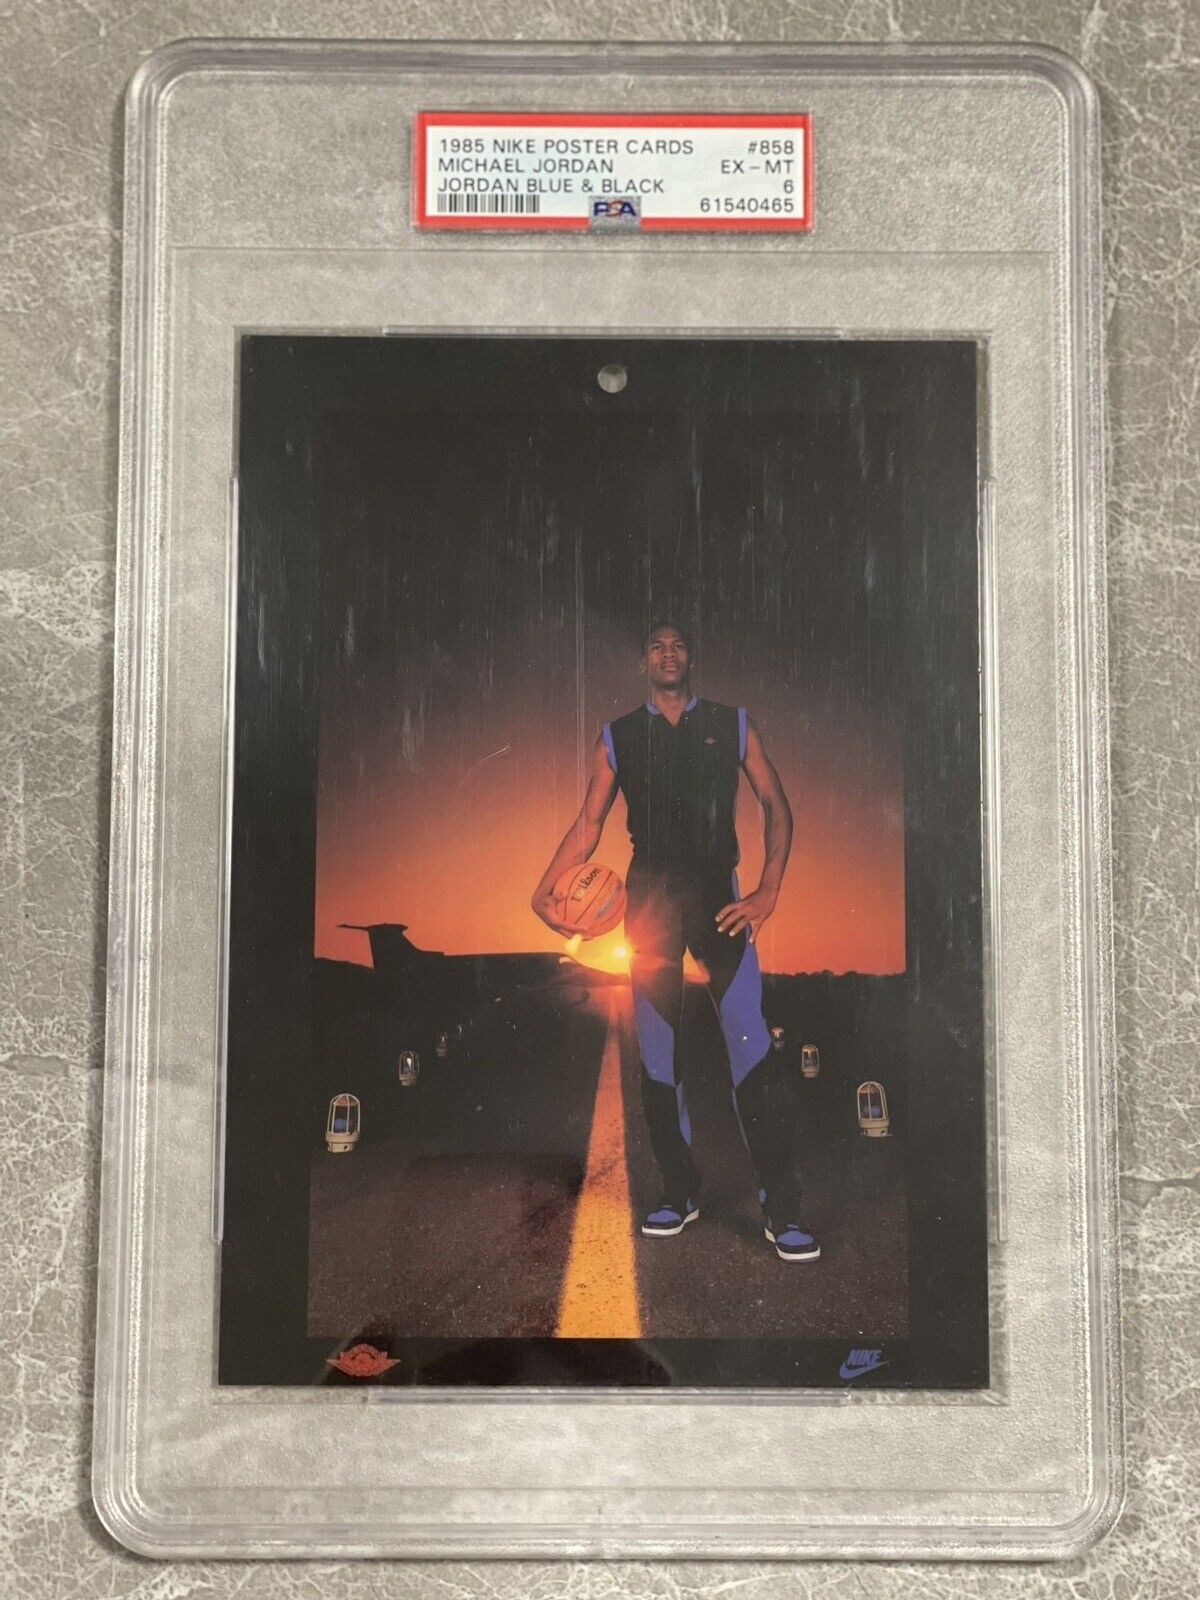 1985 Nike Poster Cards Jordan Blue & Black #858 Michael Jordan Rookie Card PSA 6